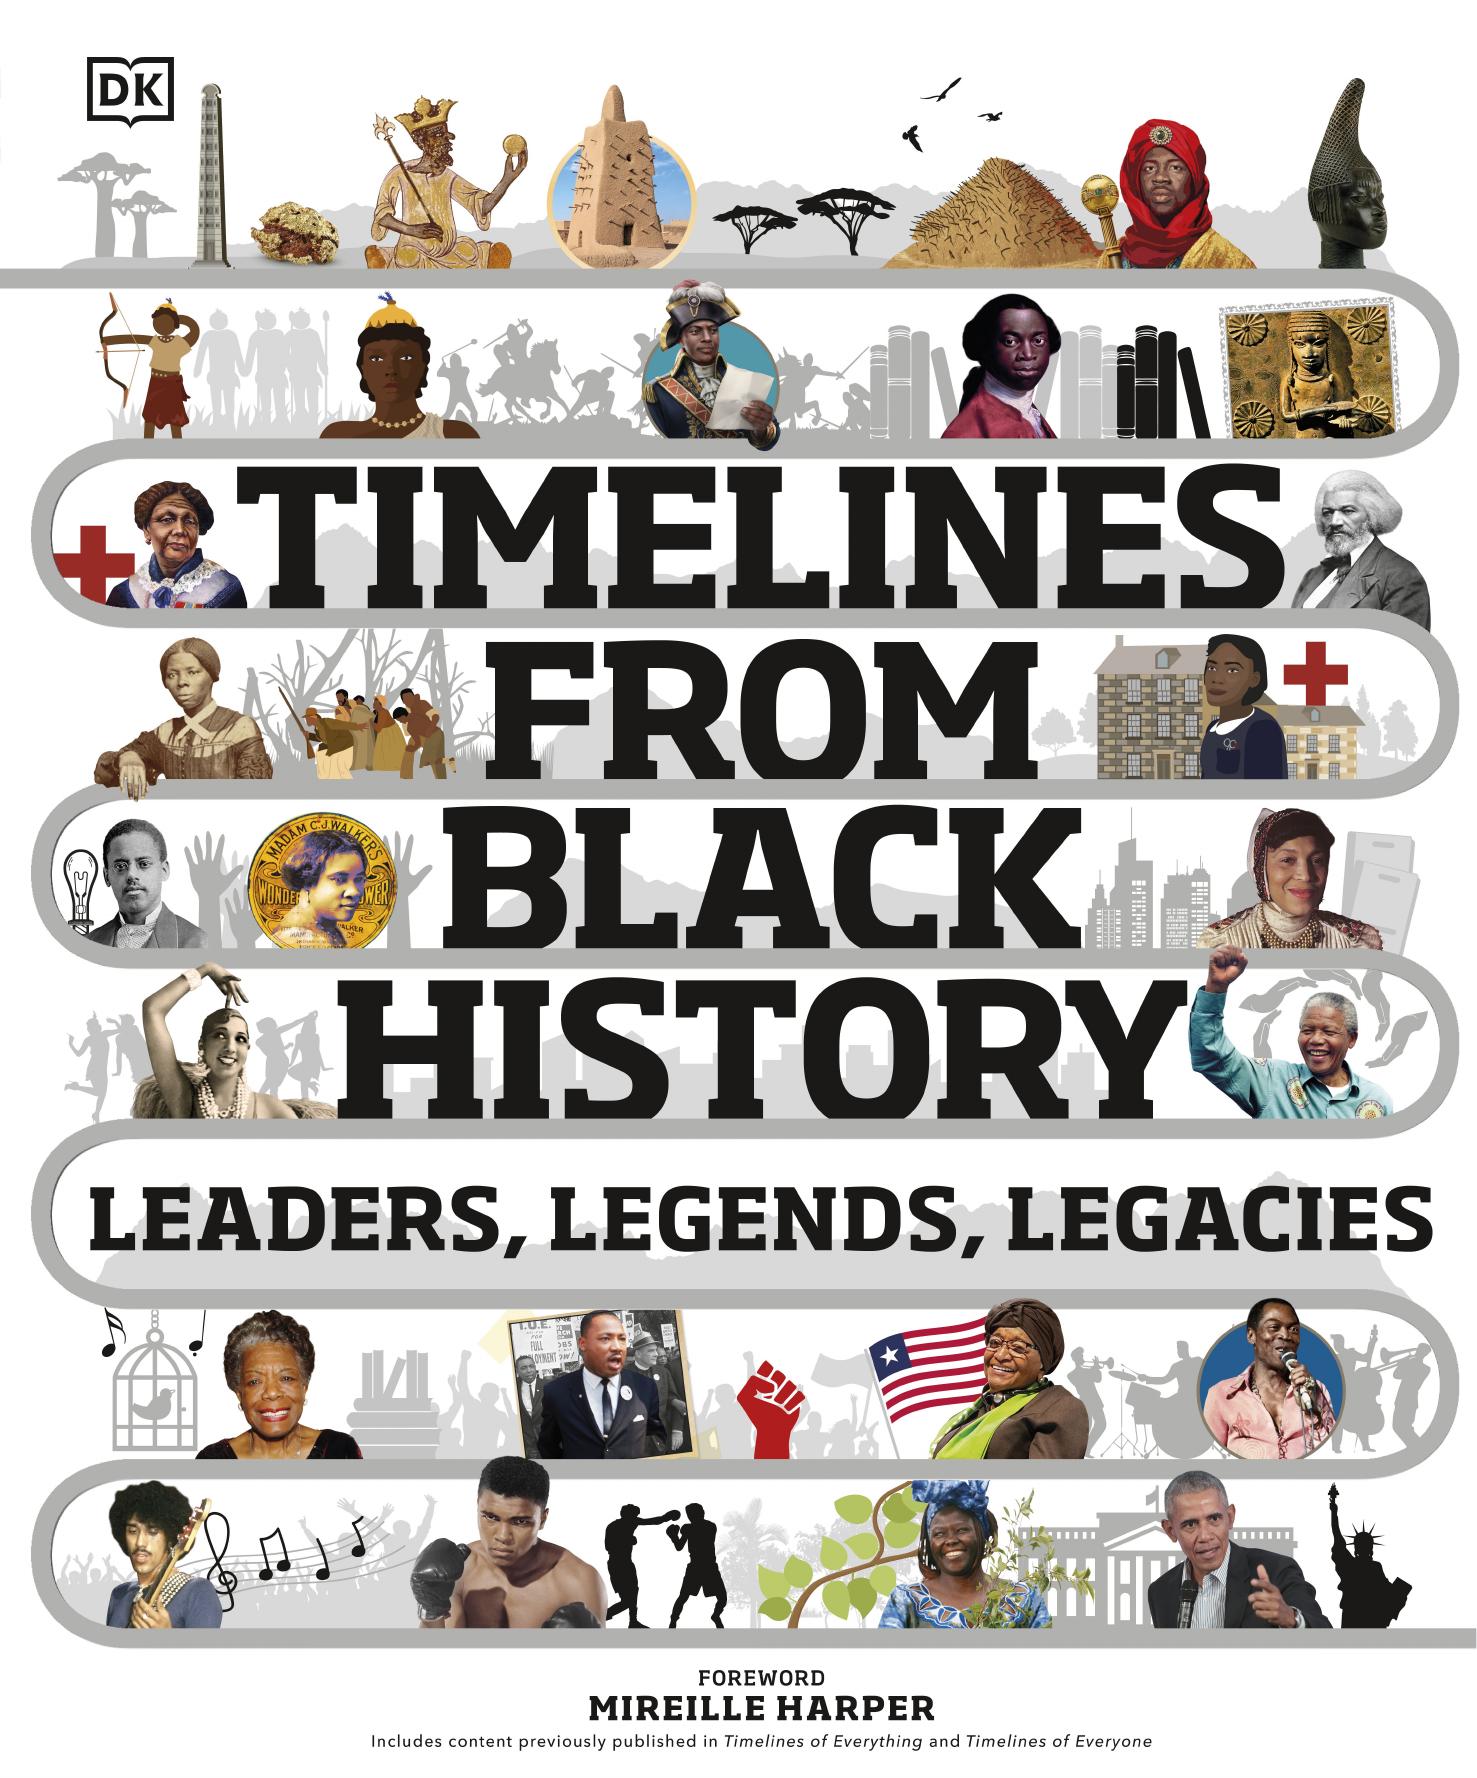 black legend history